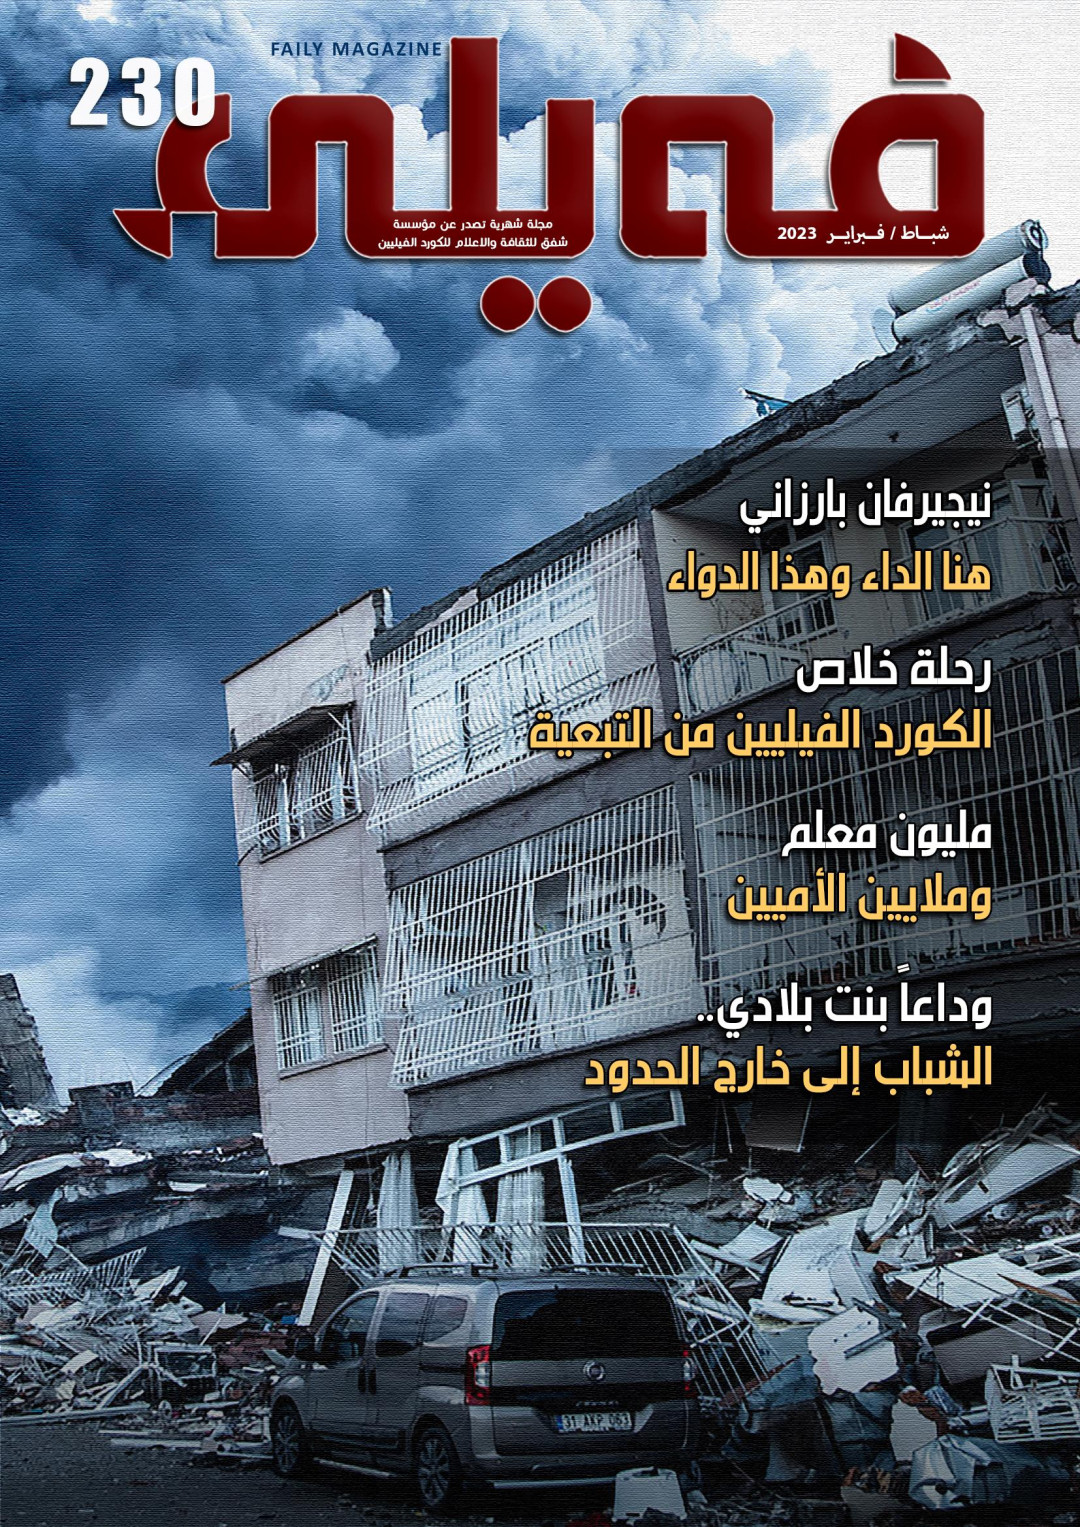 Faili Magazine 230th issue